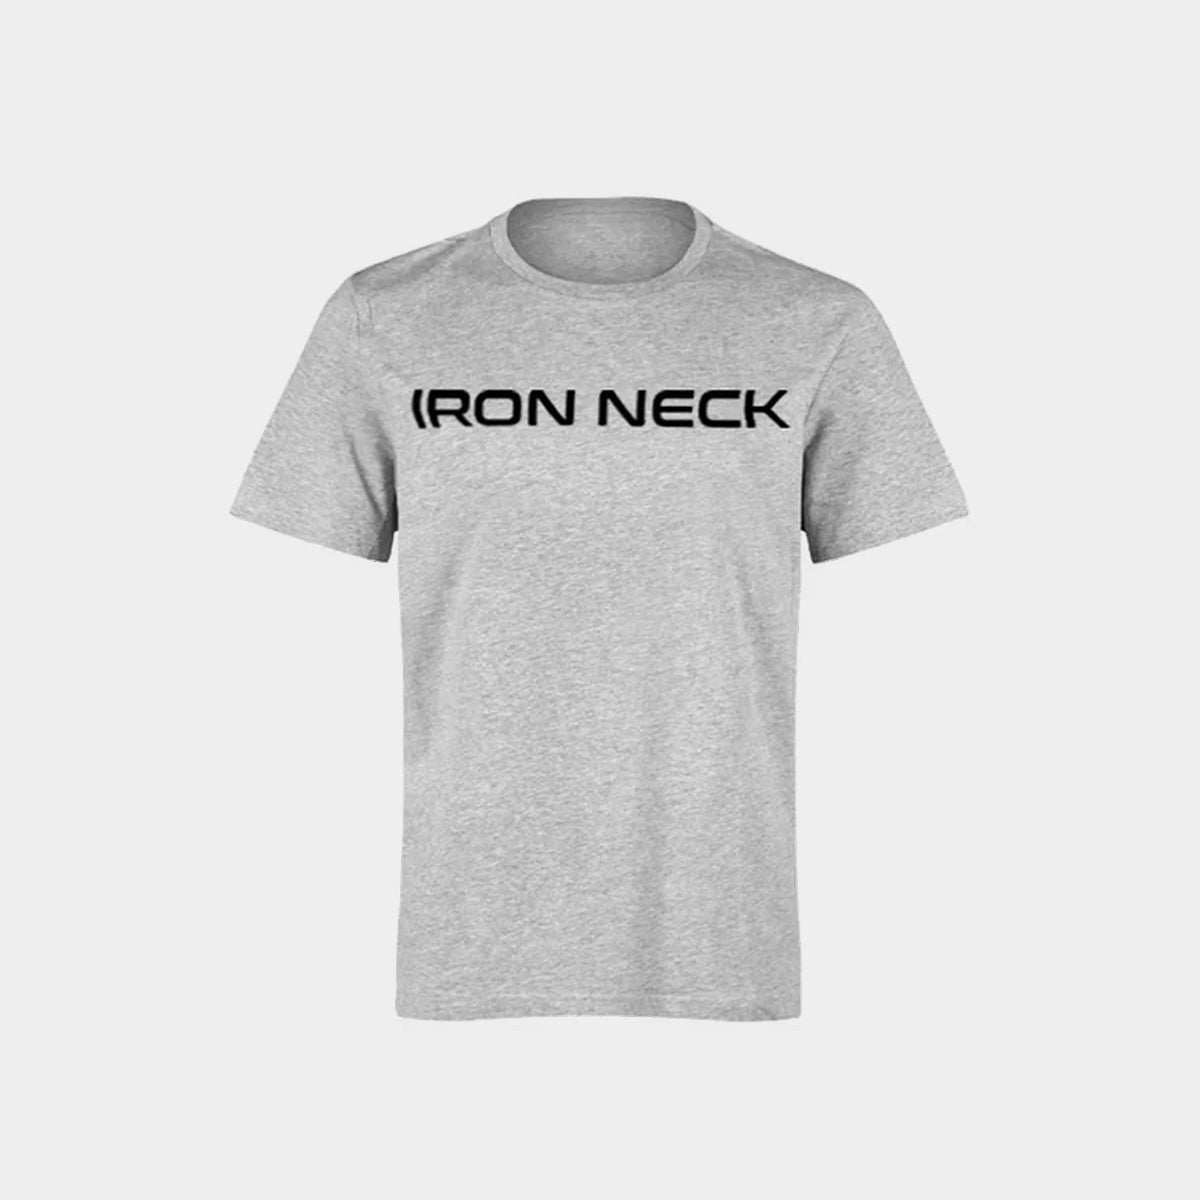 Crew Neck T Shirt Apparel Iron Neck   